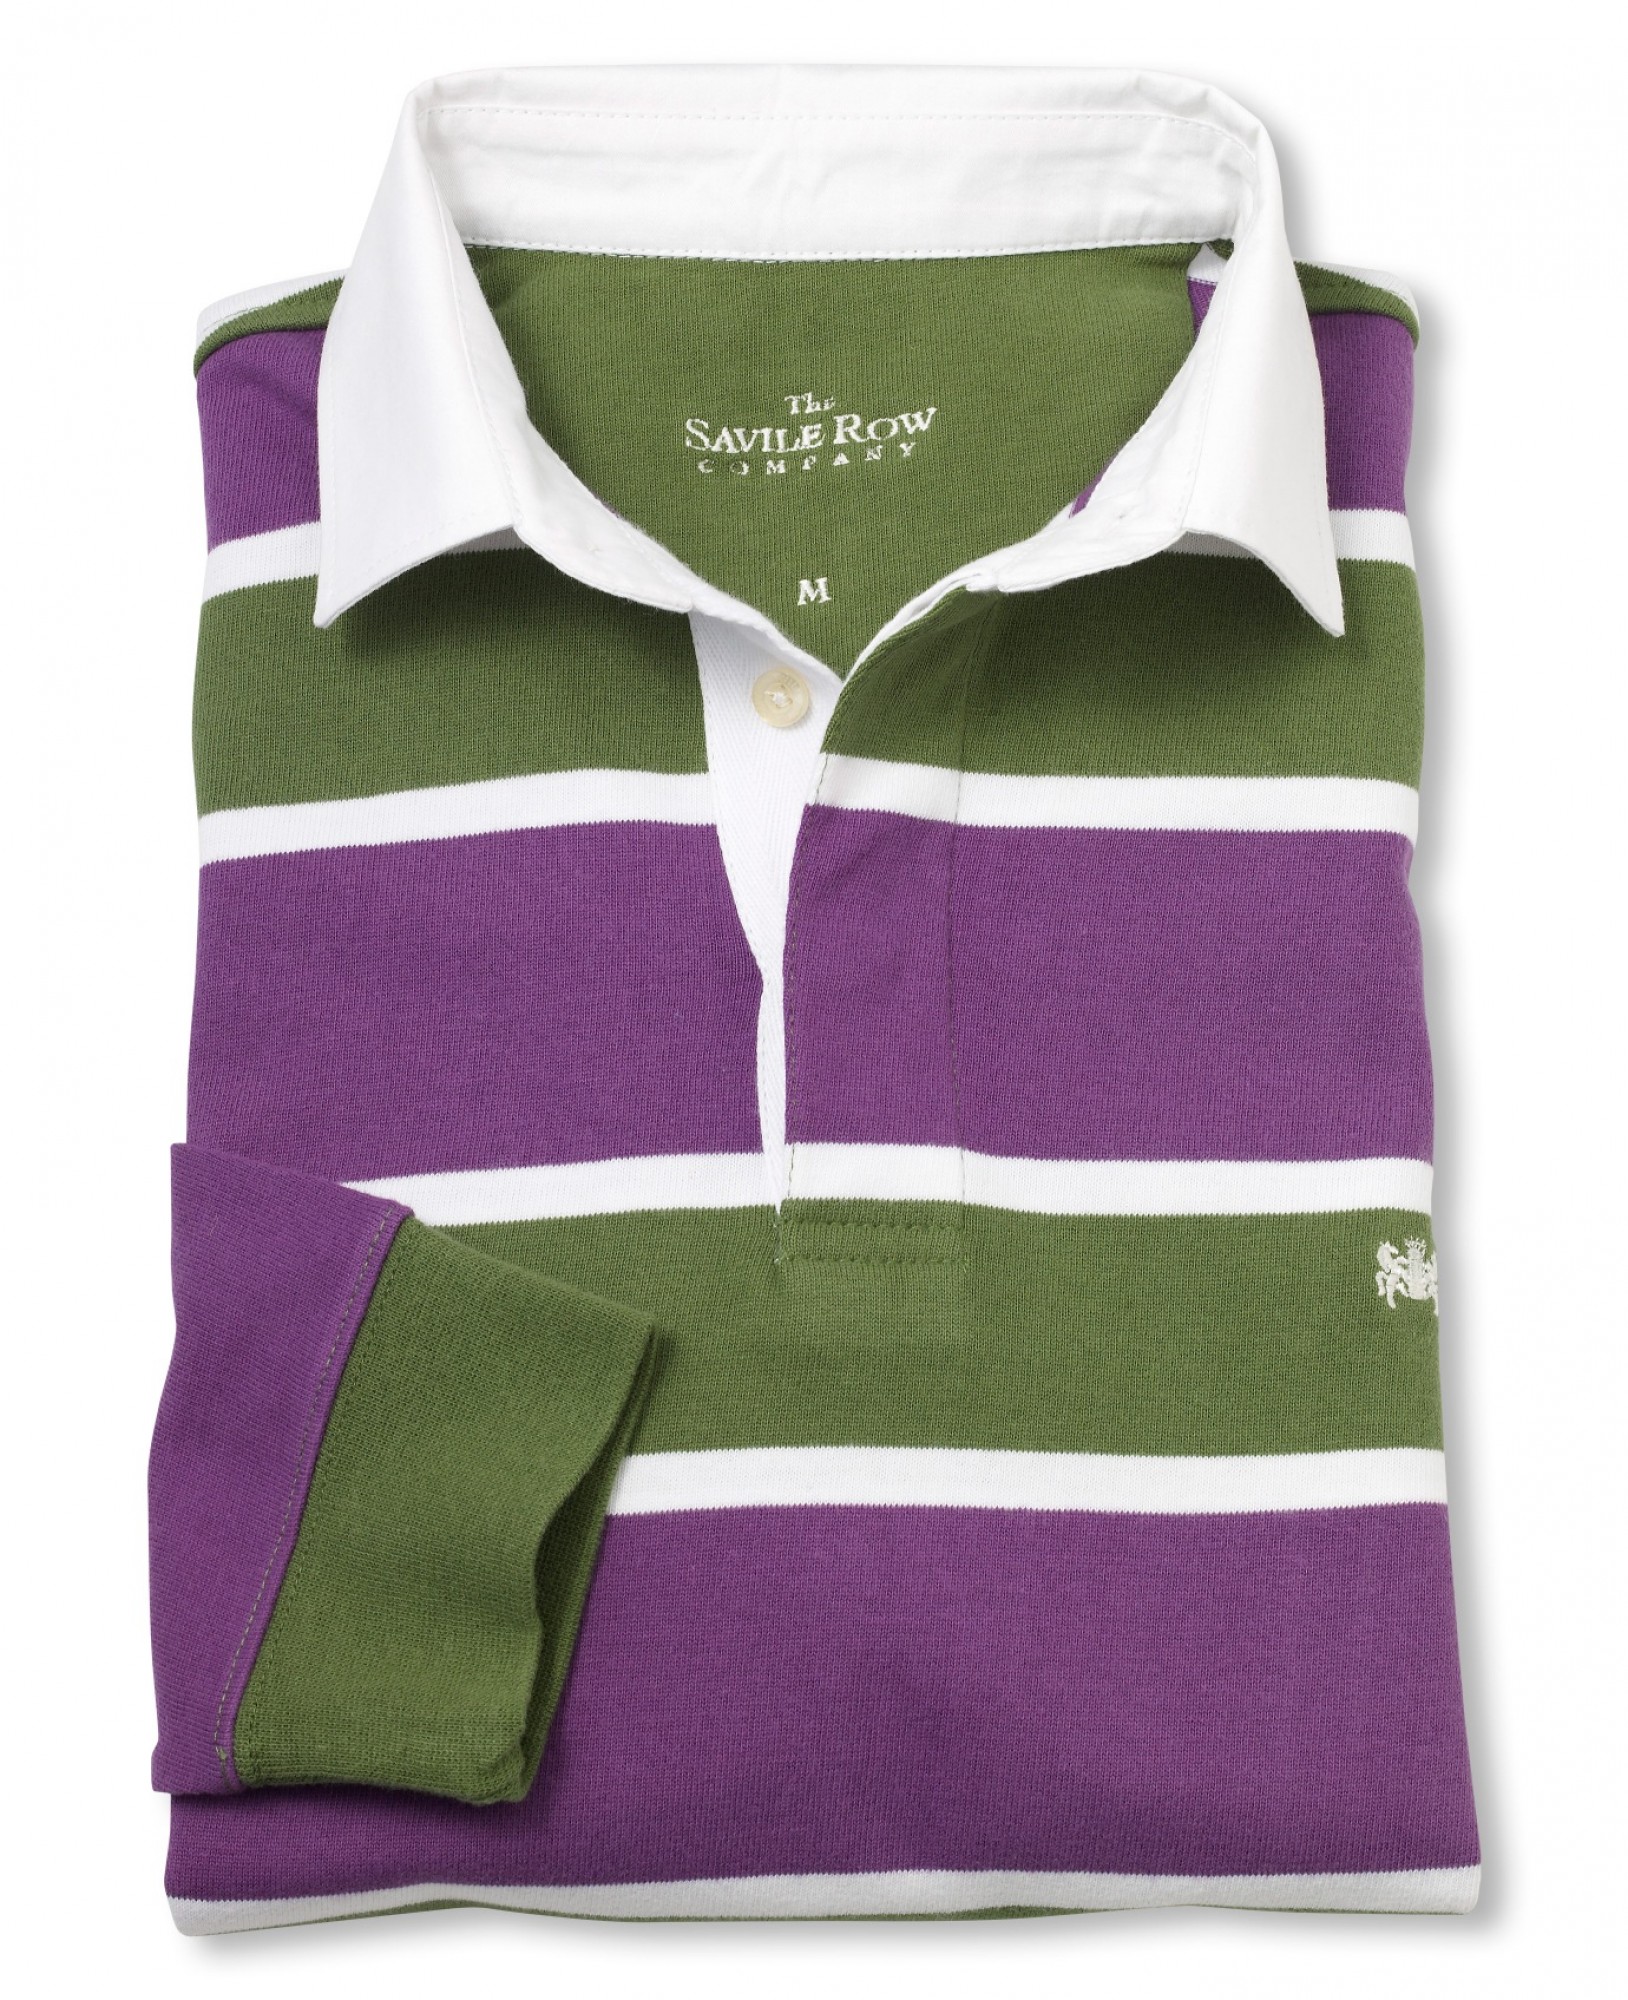 Savile Row Co. Purple White Green Stripe Rugby Shirt XL